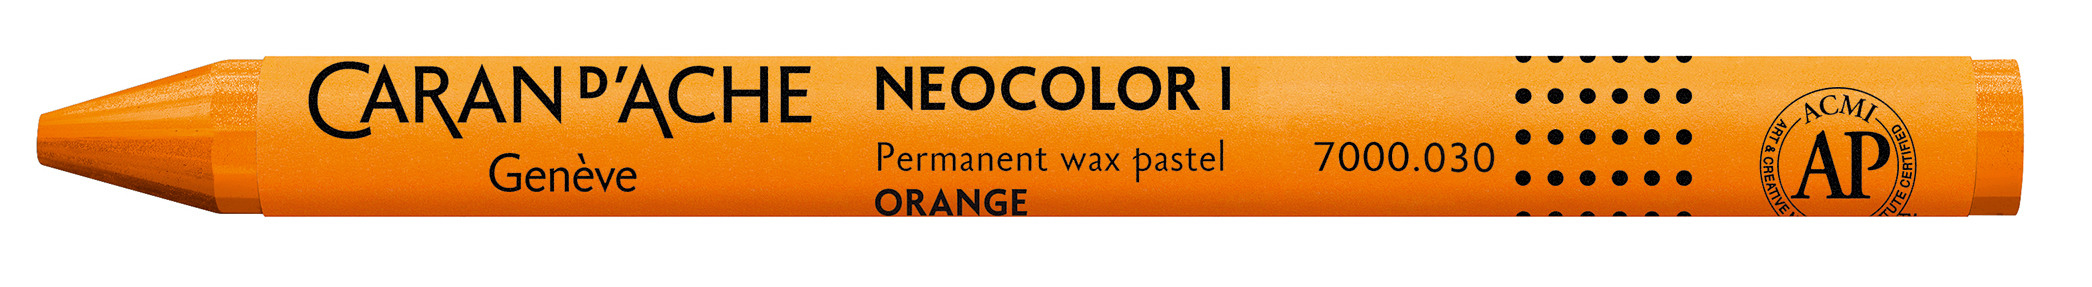 CARAN D'ACHE Wachsmalkreide Neocolor 1 7000.030 orange